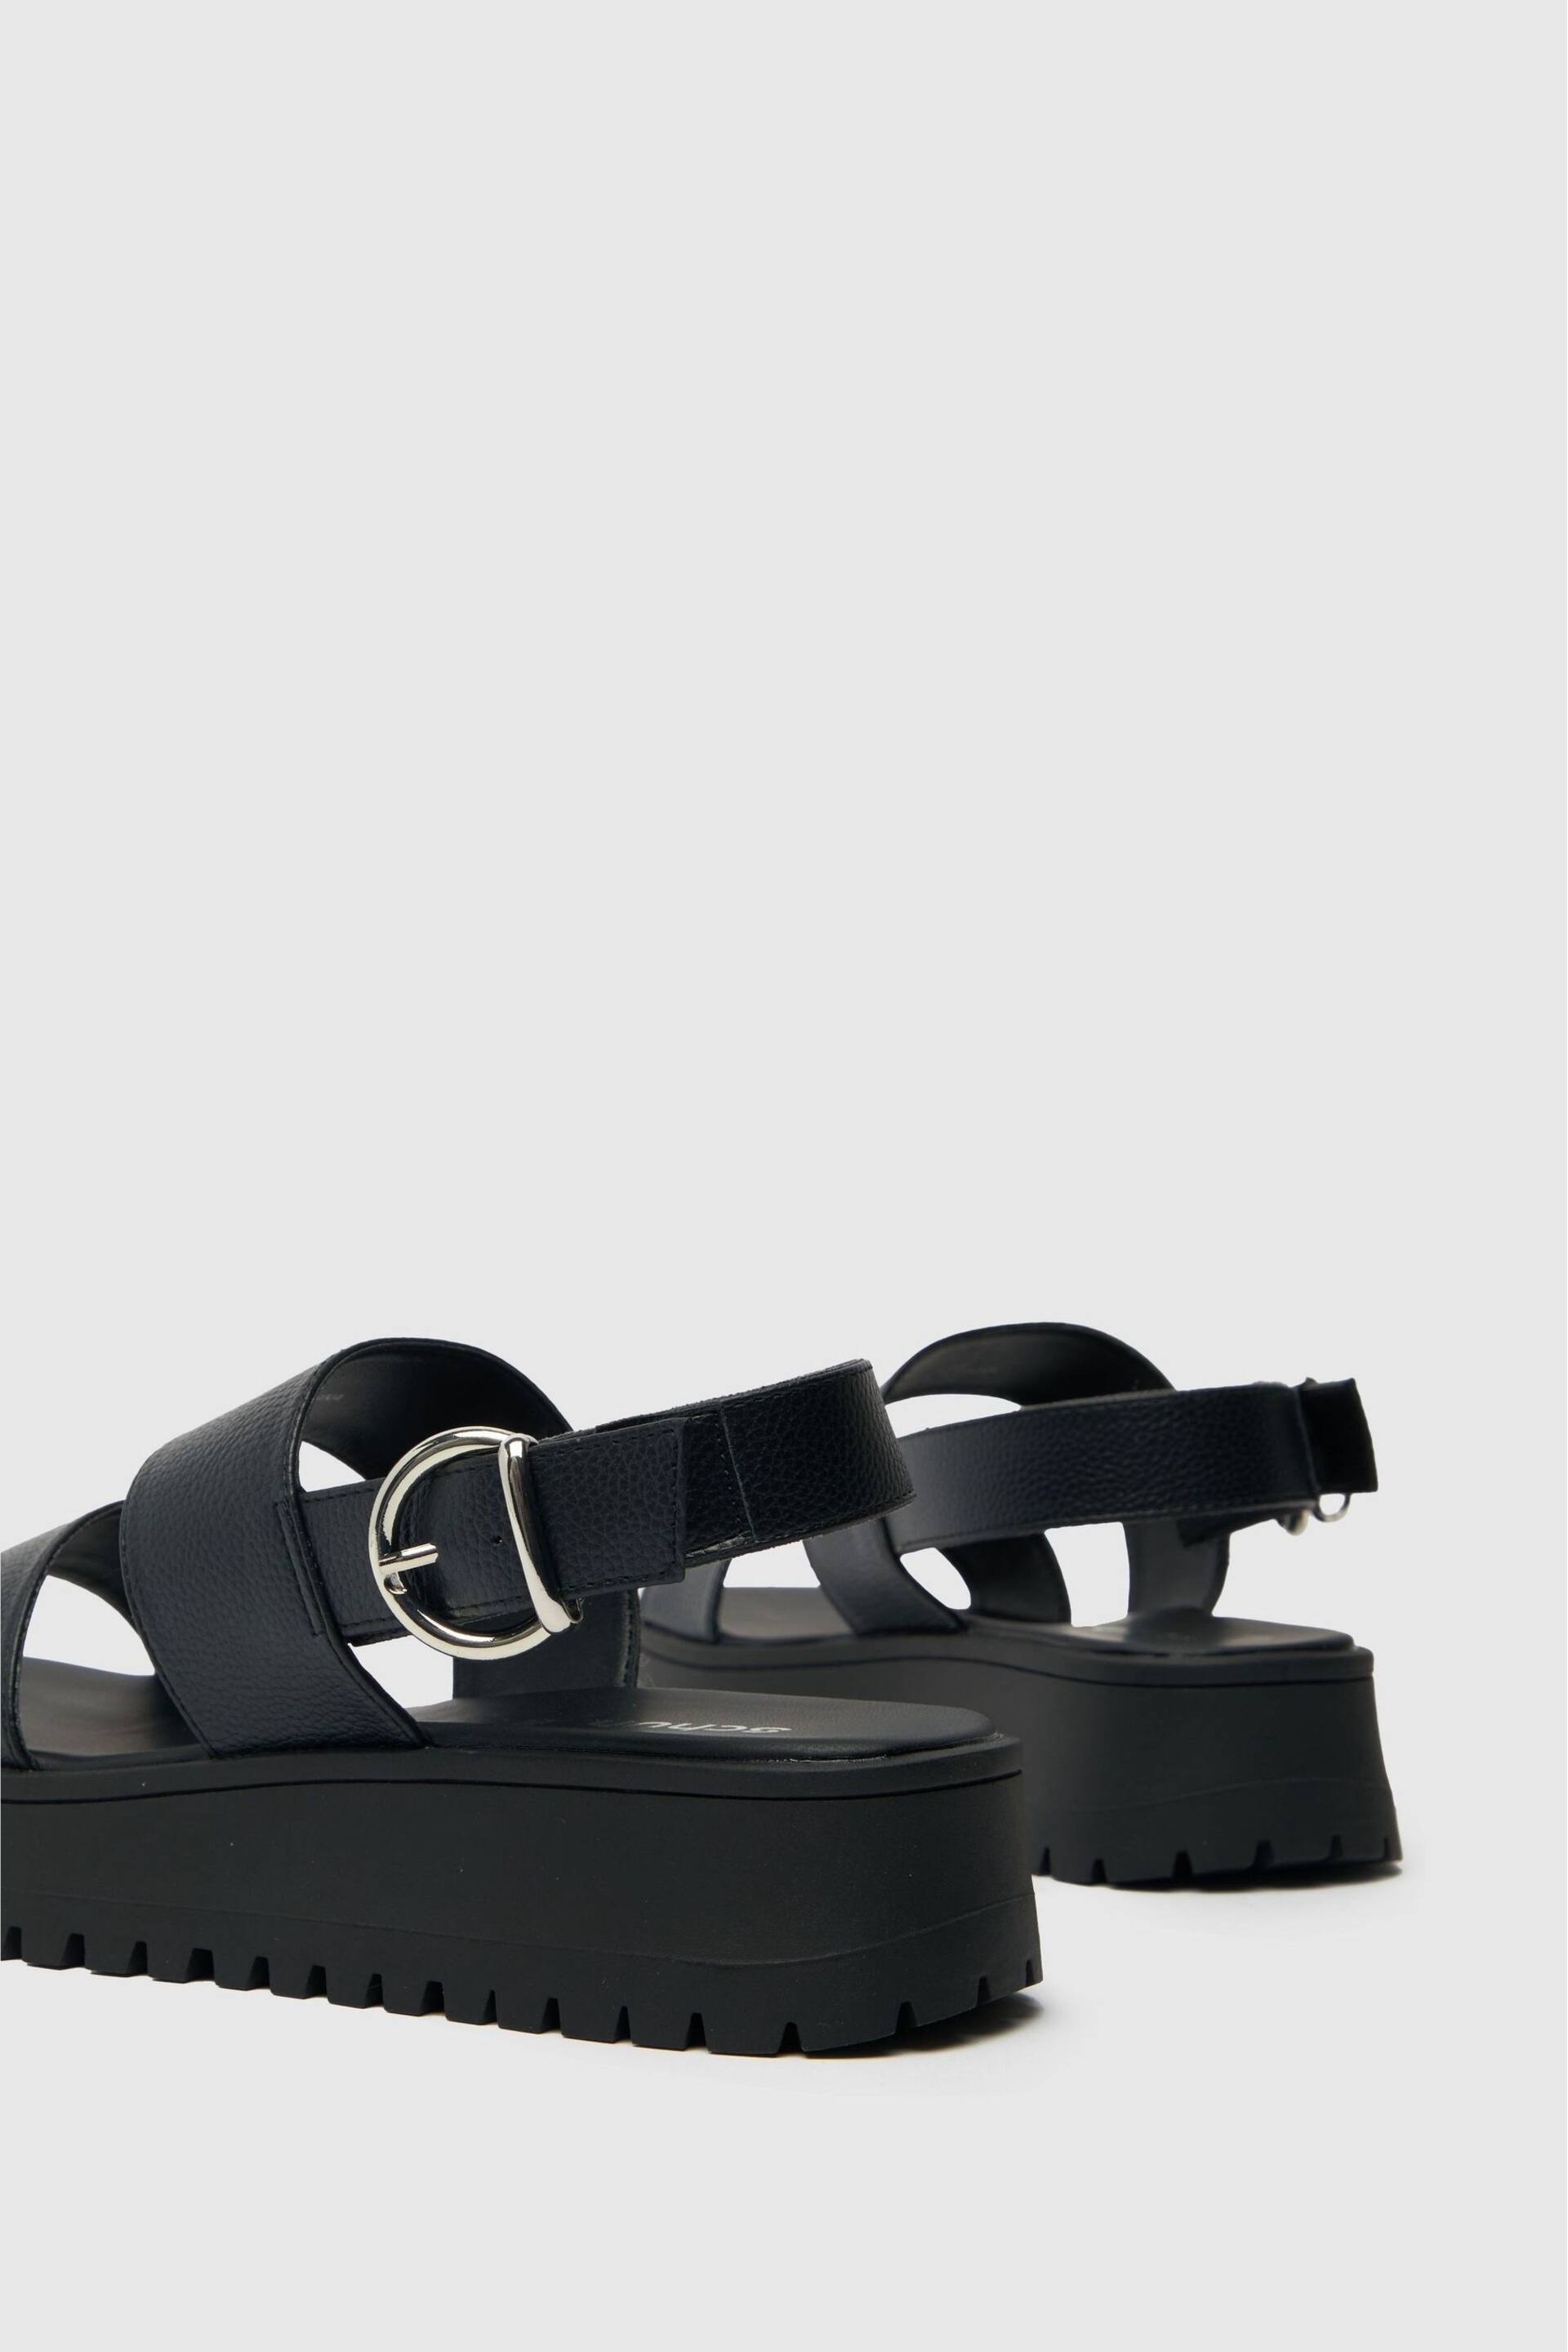 Schuh Tanya Chunky Flatform Sandals - Image 4 of 5